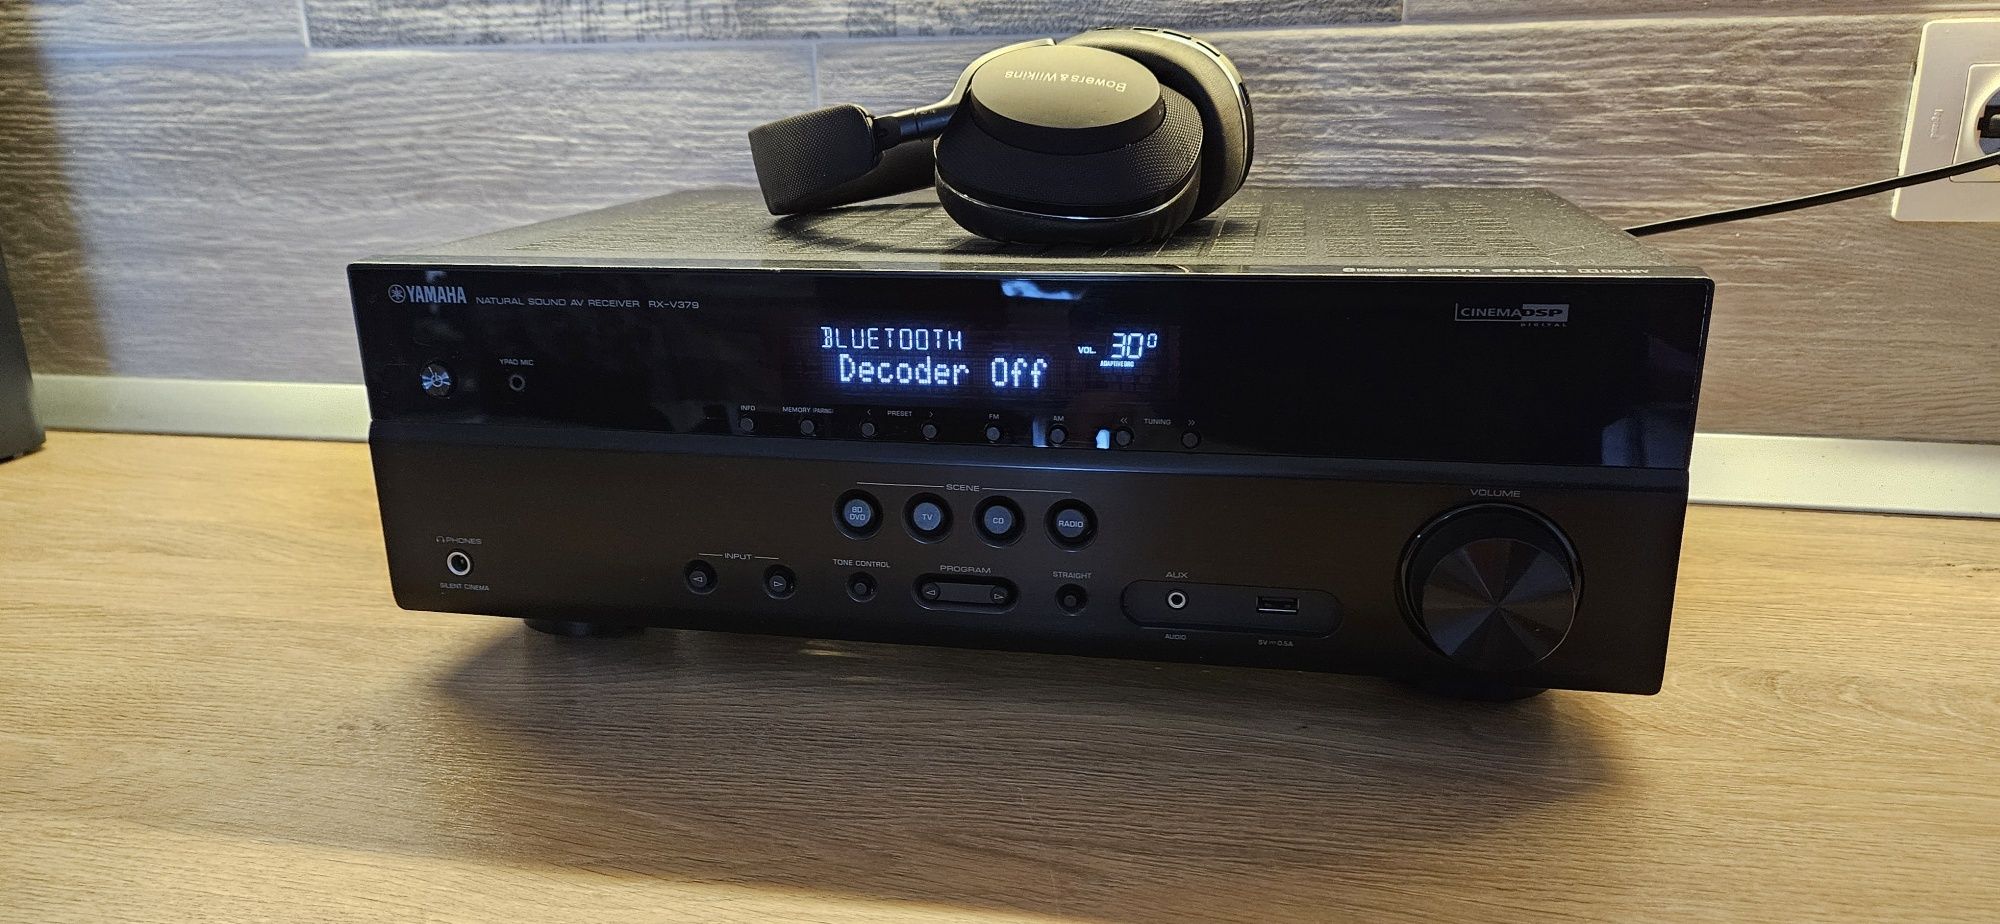 Amplificator Onkyo tx-nr 509 Yamaha rxv379 Bluetooth